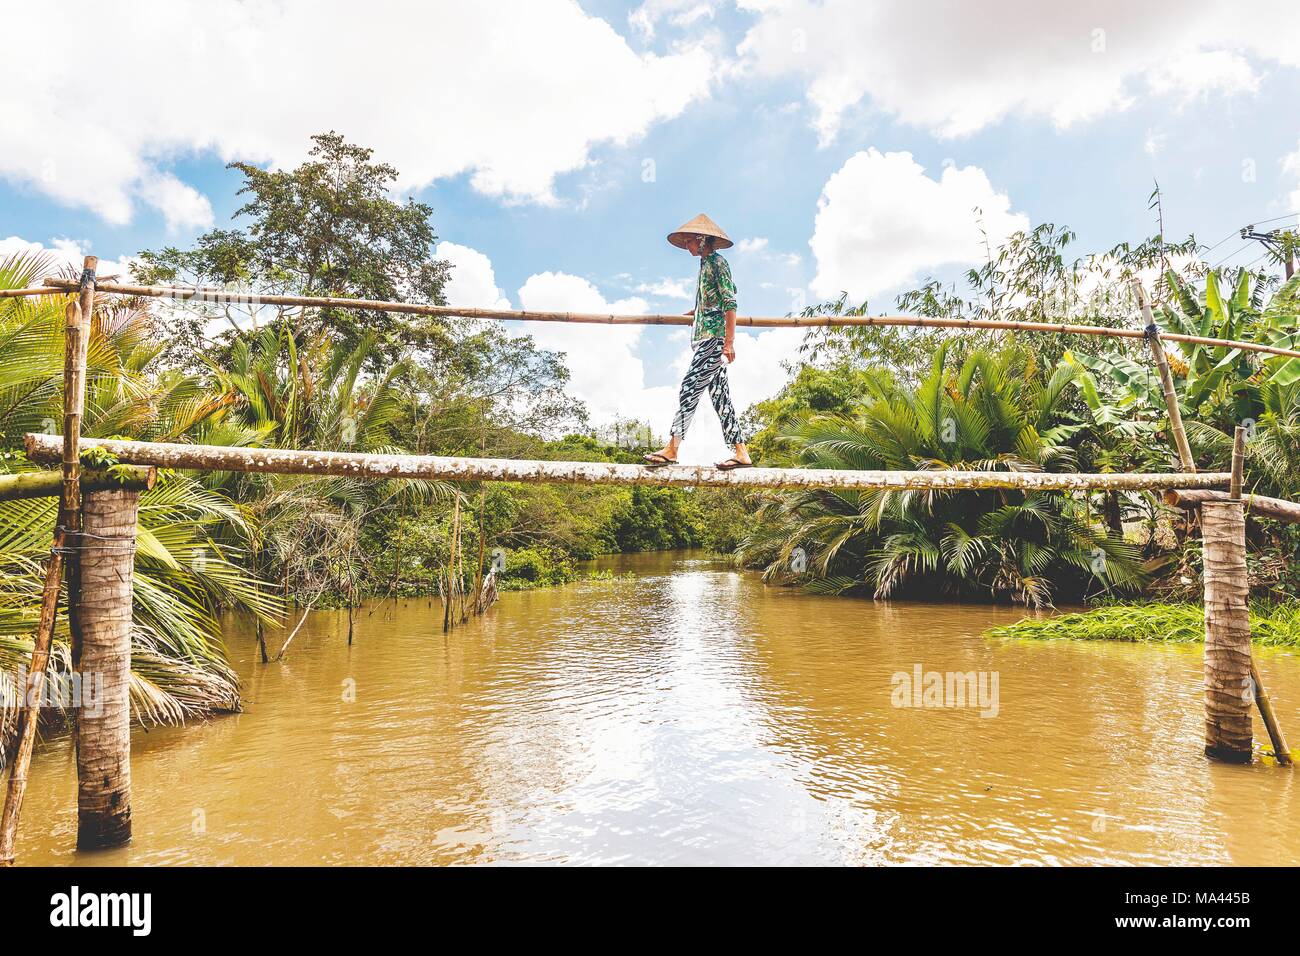 A 'monkey bridge' made of bamboo across the Mekong Delta in Vietnam Stock Photo